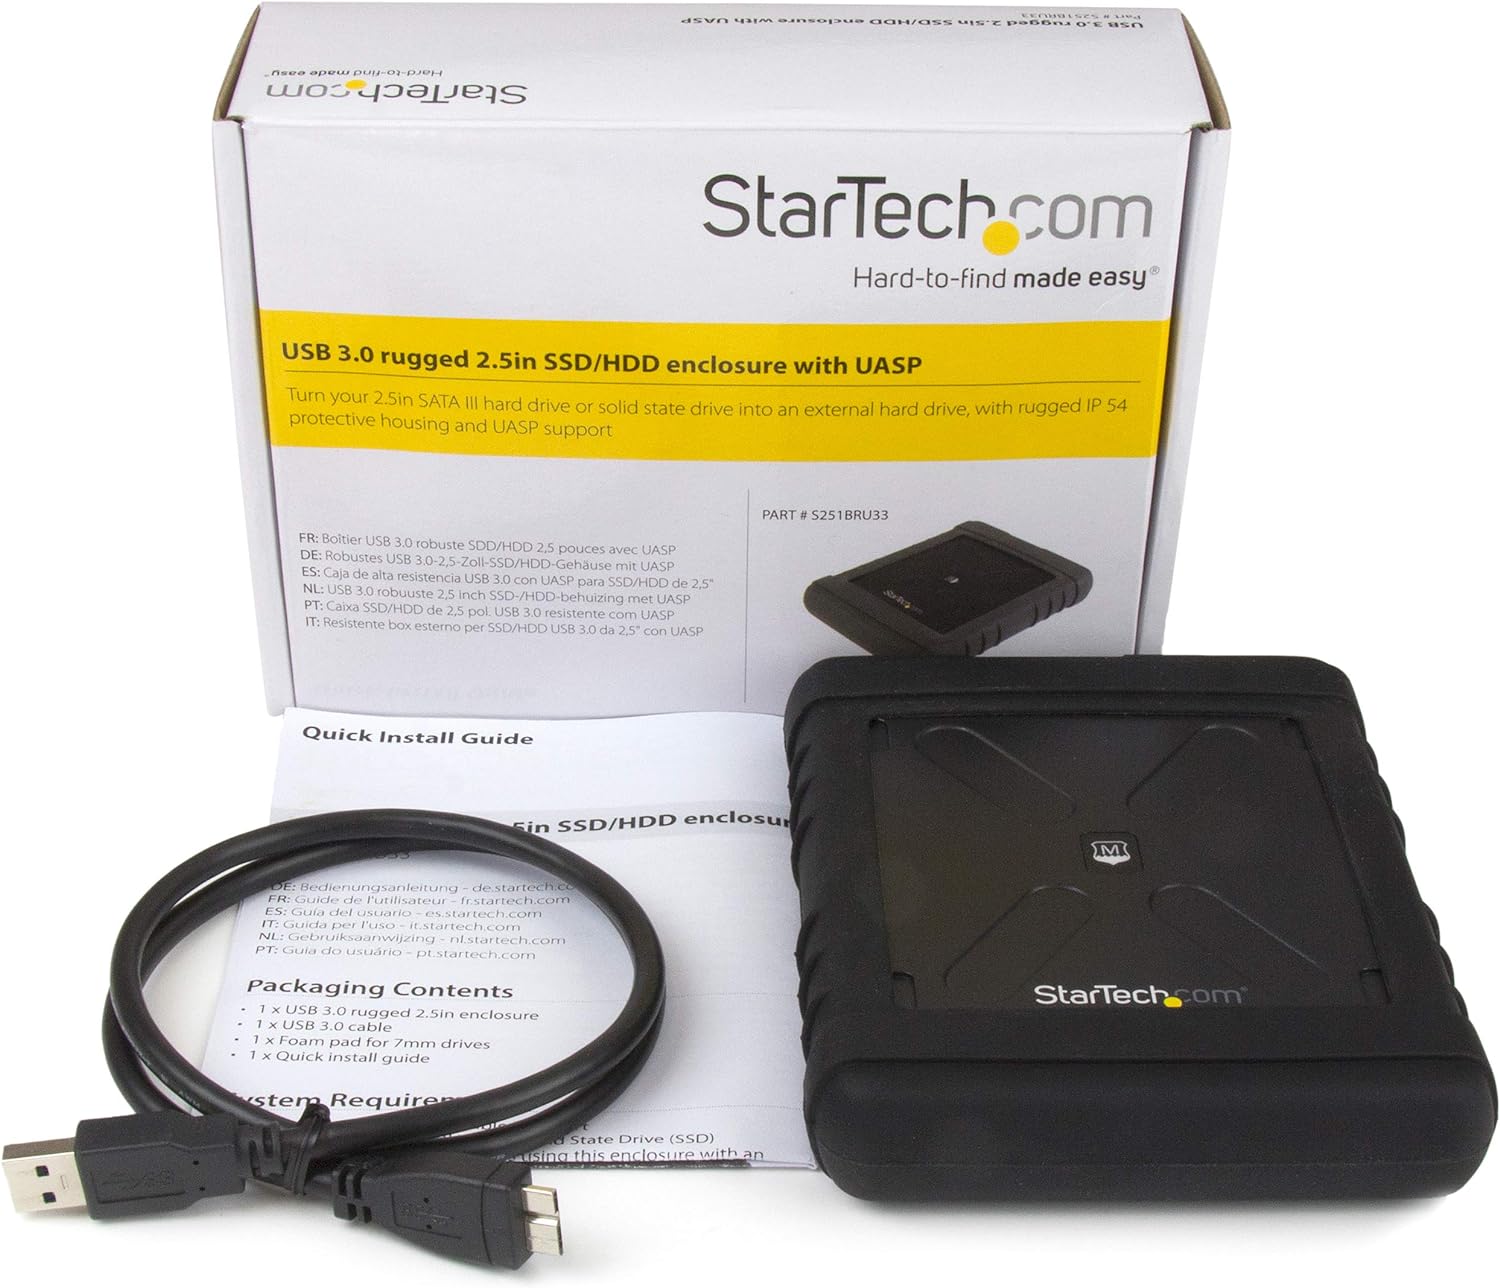 StarTech.com USB 3.0 to 2.5in SATA SSD HDD Enclosure S251BRU33